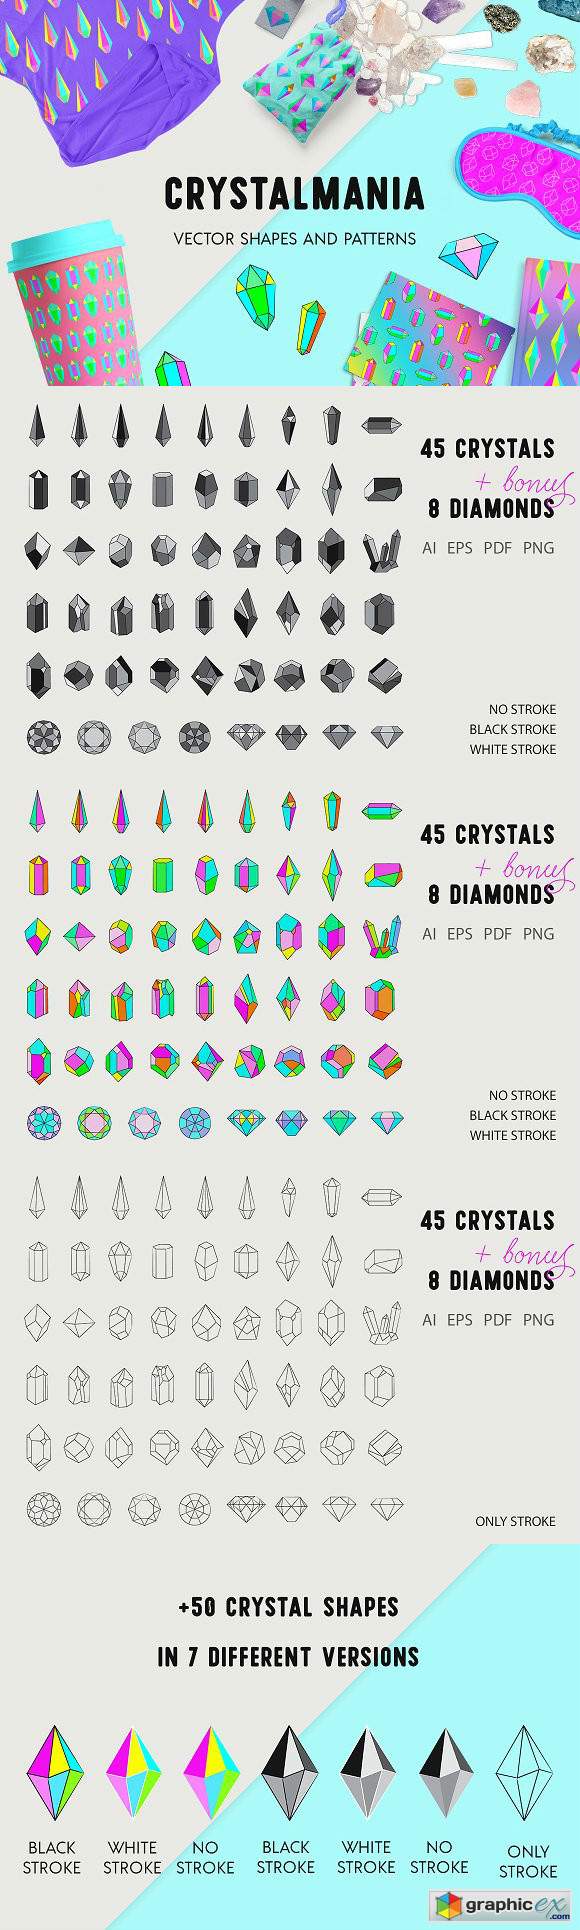 Crystalmania - Crystals Vector Pack